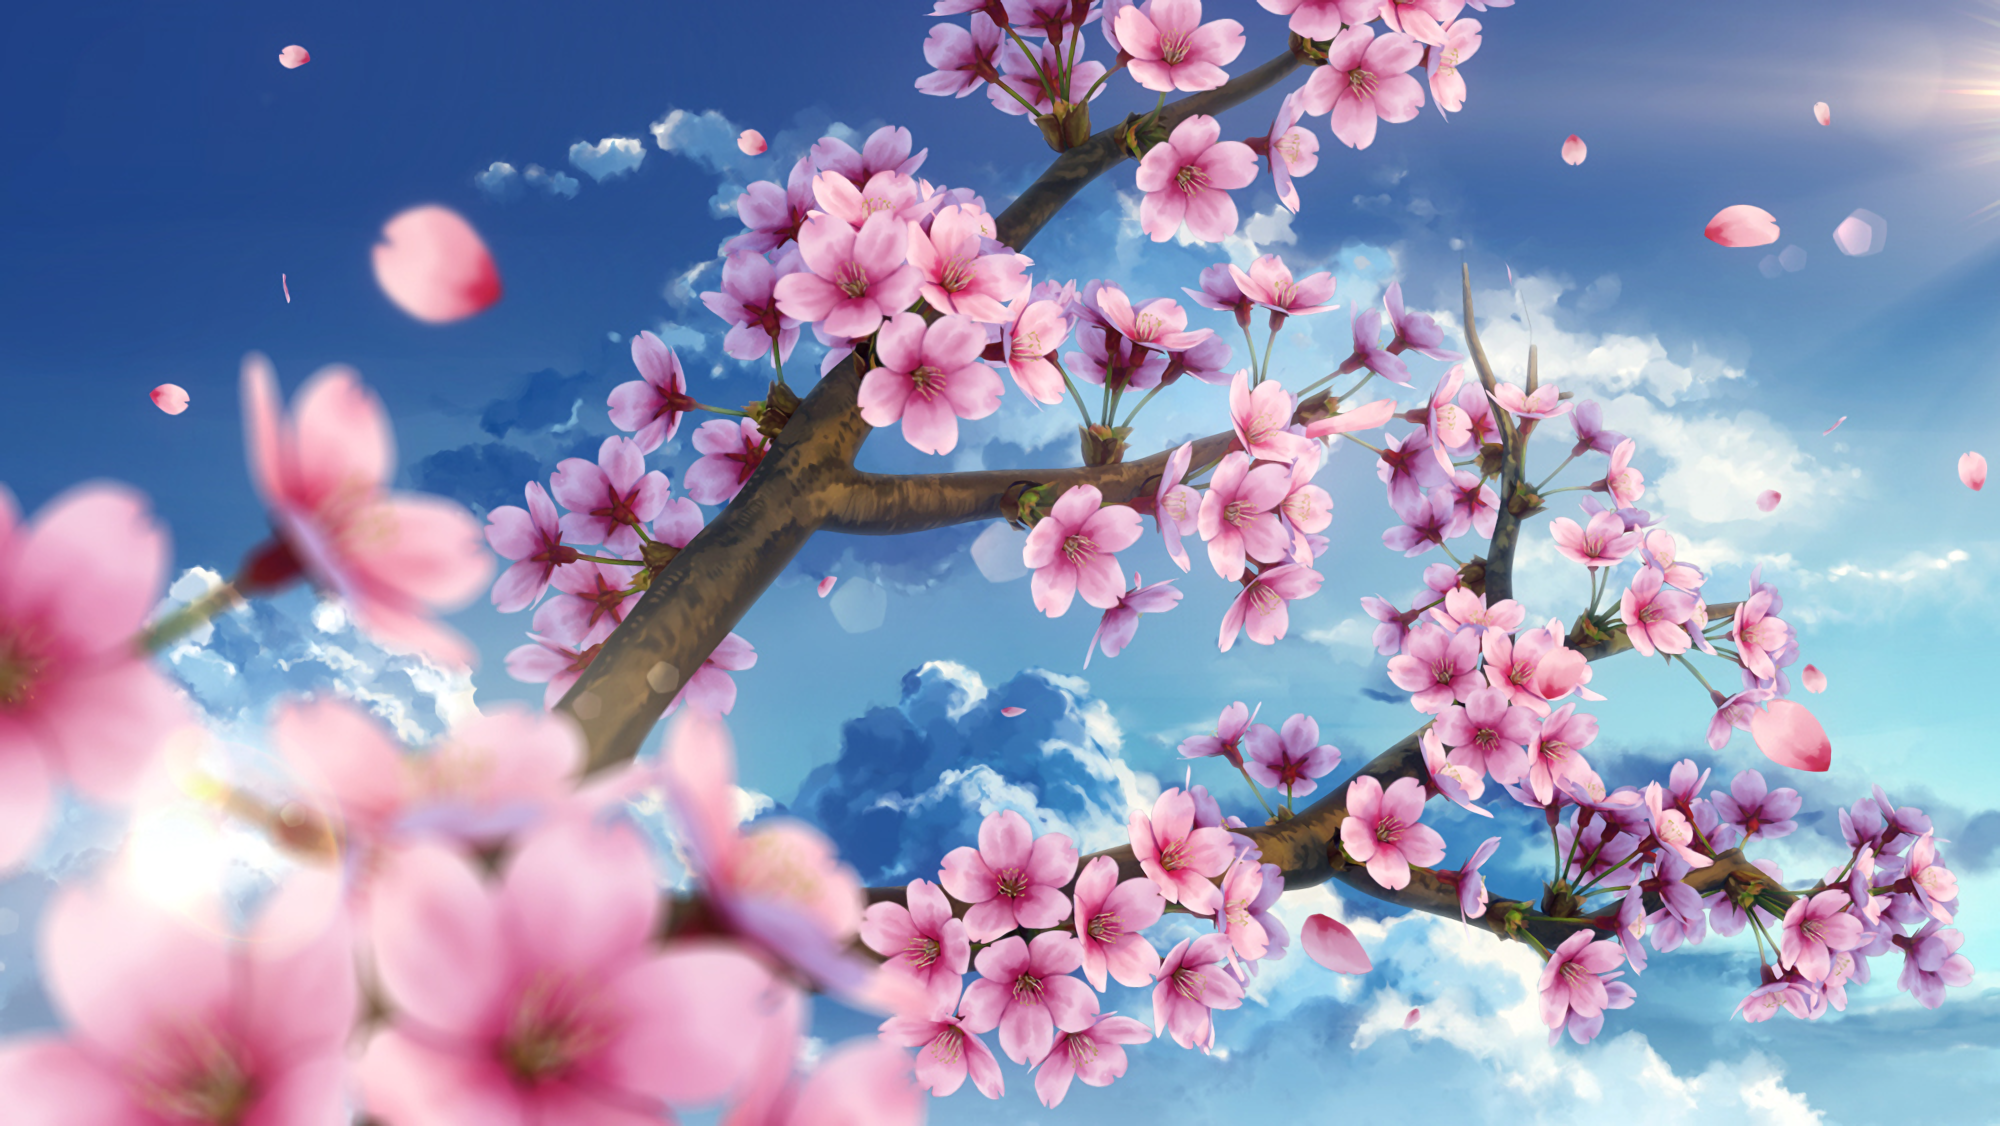 Sakura blossom. Черри блоссом дерево. Черри блоссом арт. Сакура черри блоссом. Сакура черри блоссом дерево.